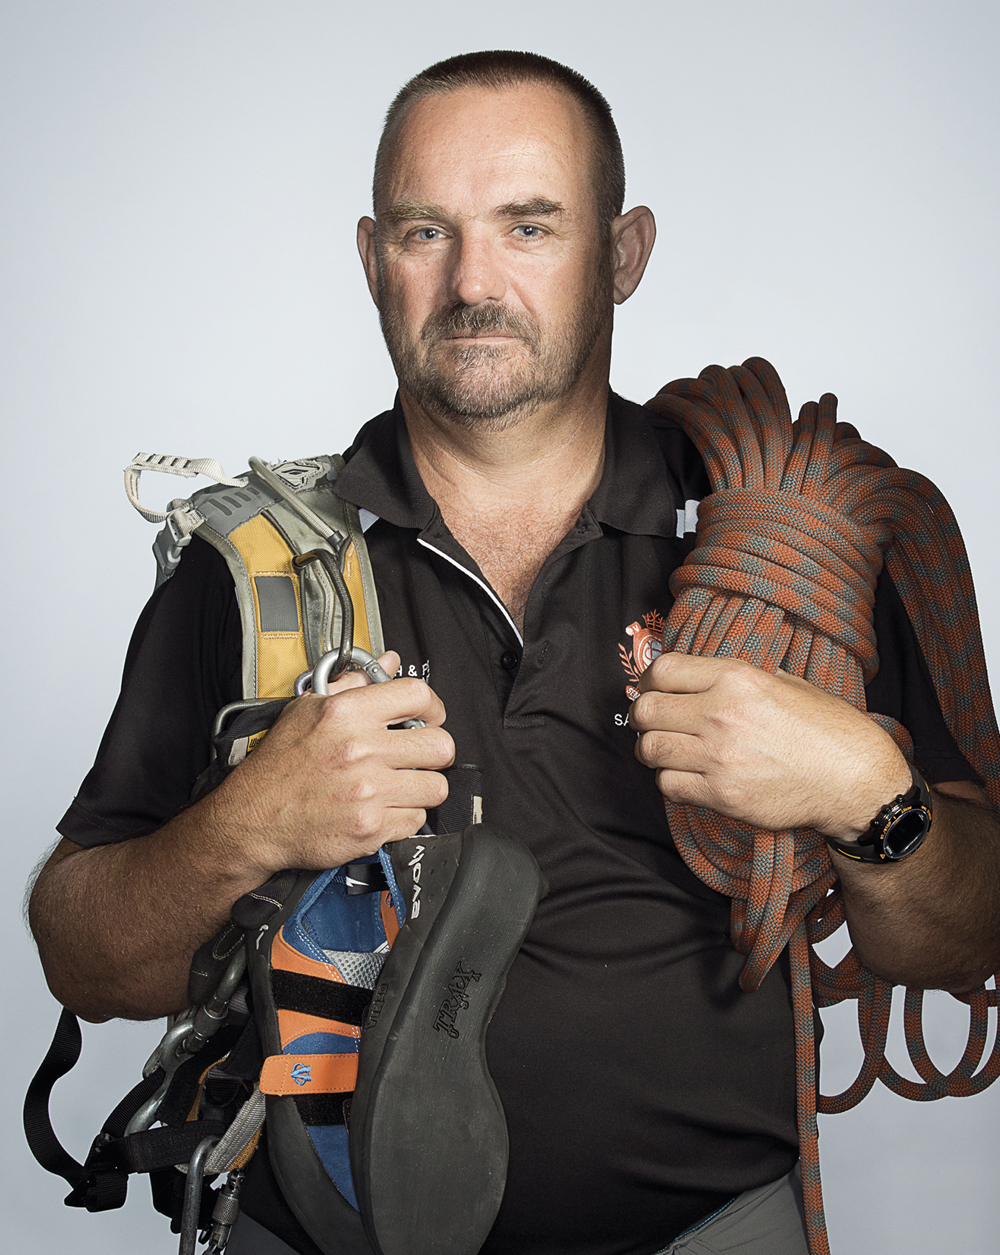 Portrait of Paul Delane holding climbing gear